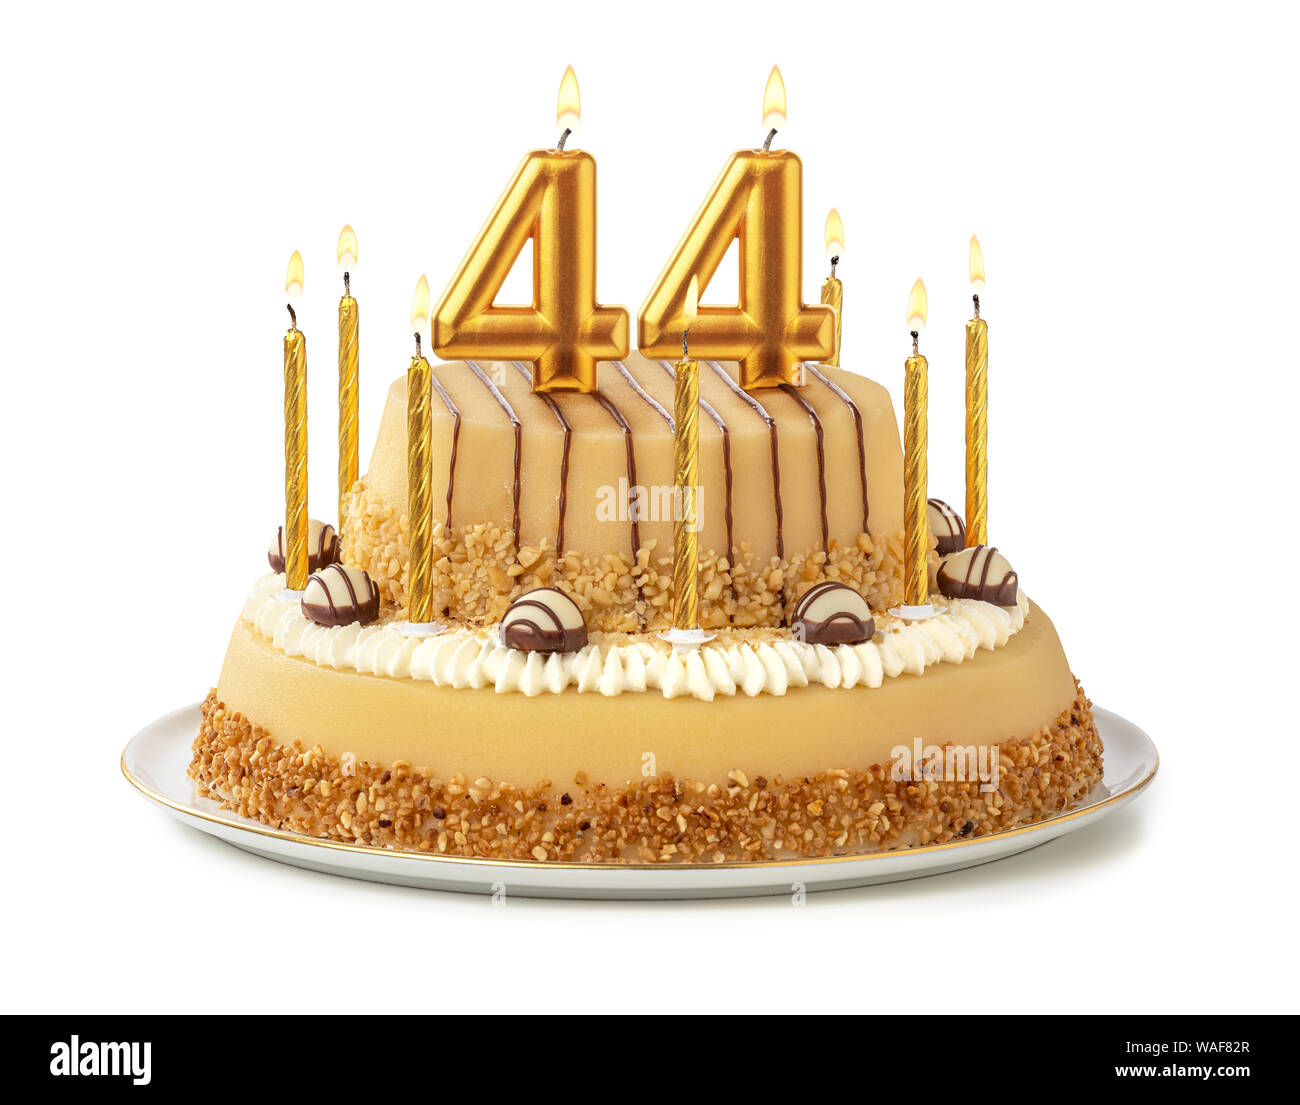 festive-cake-with-golden-candles-number-44-WAF82R.jpg